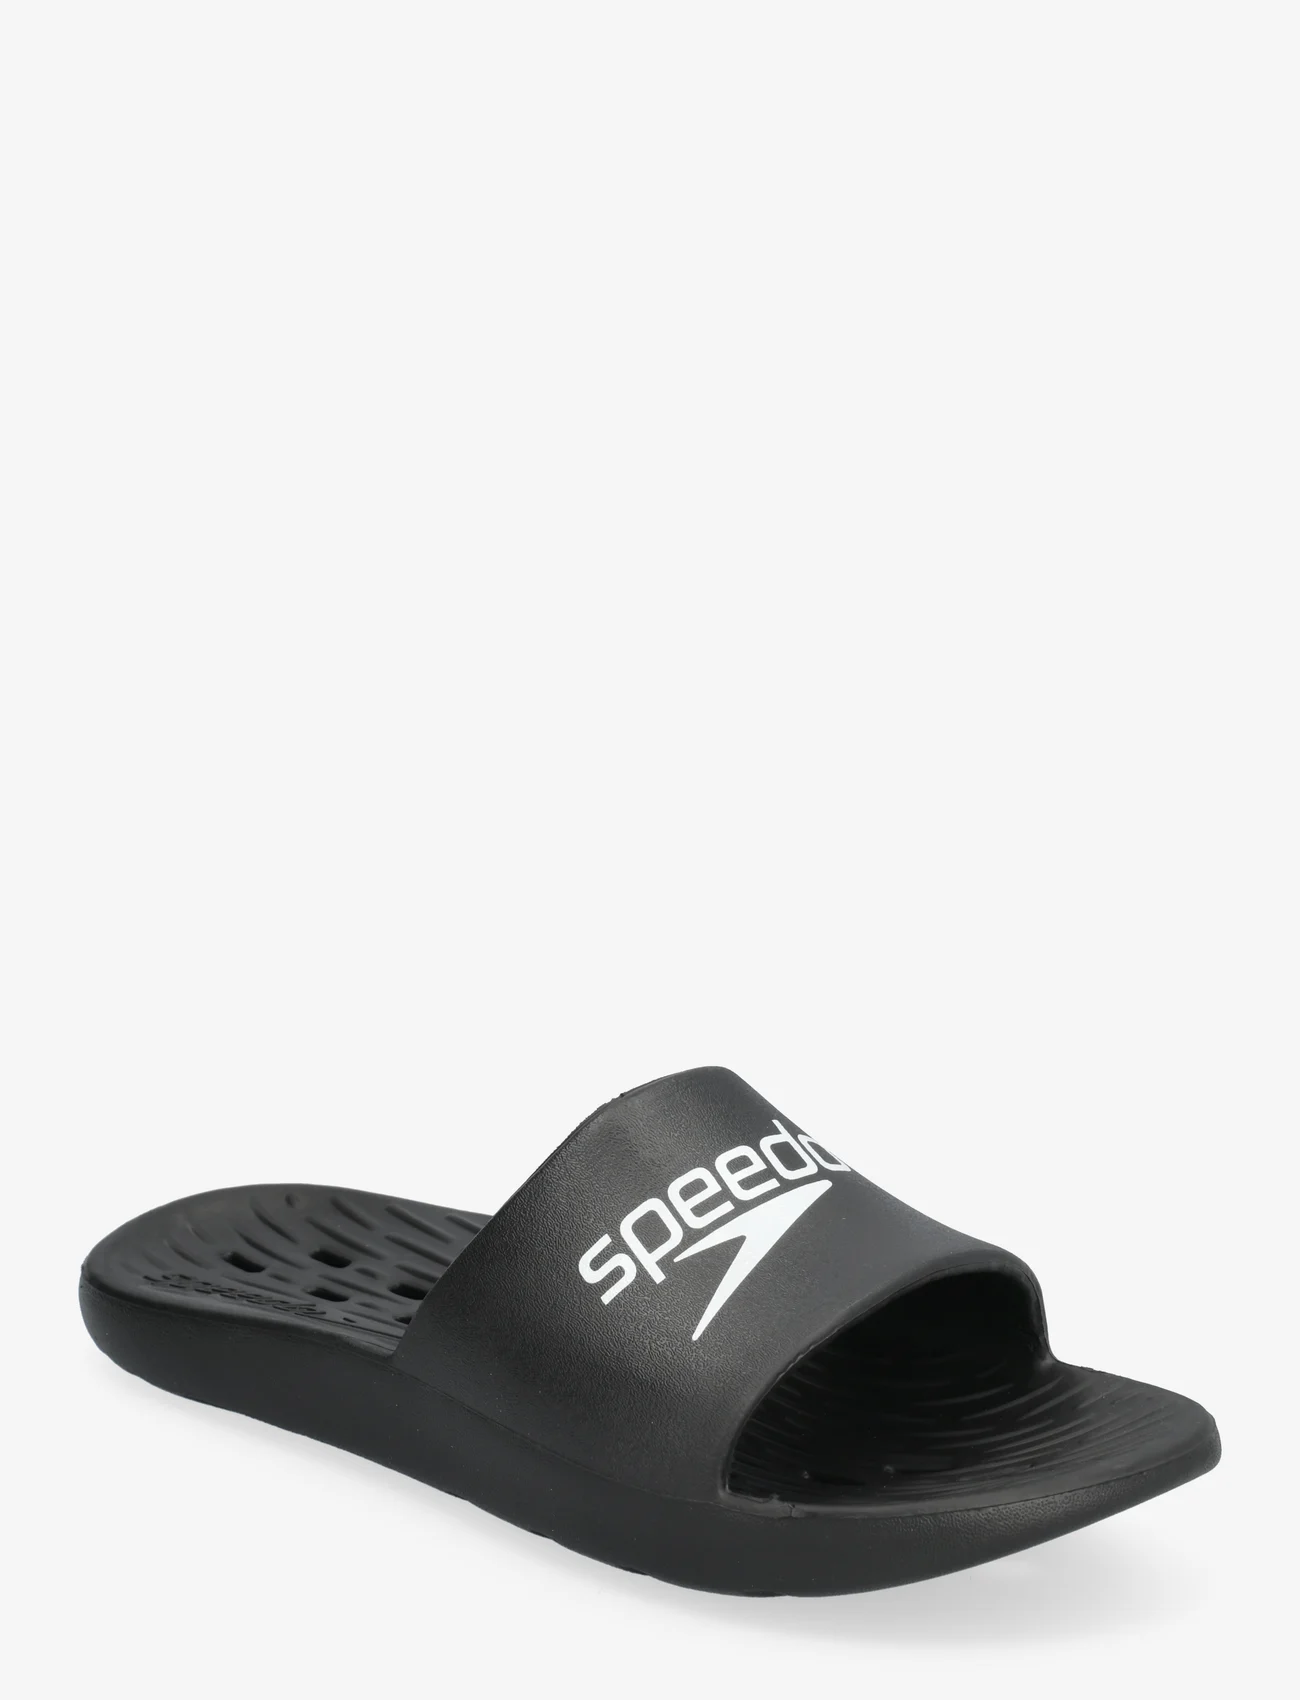 Speedo - Speedo Slide AM - sandals - black - 0